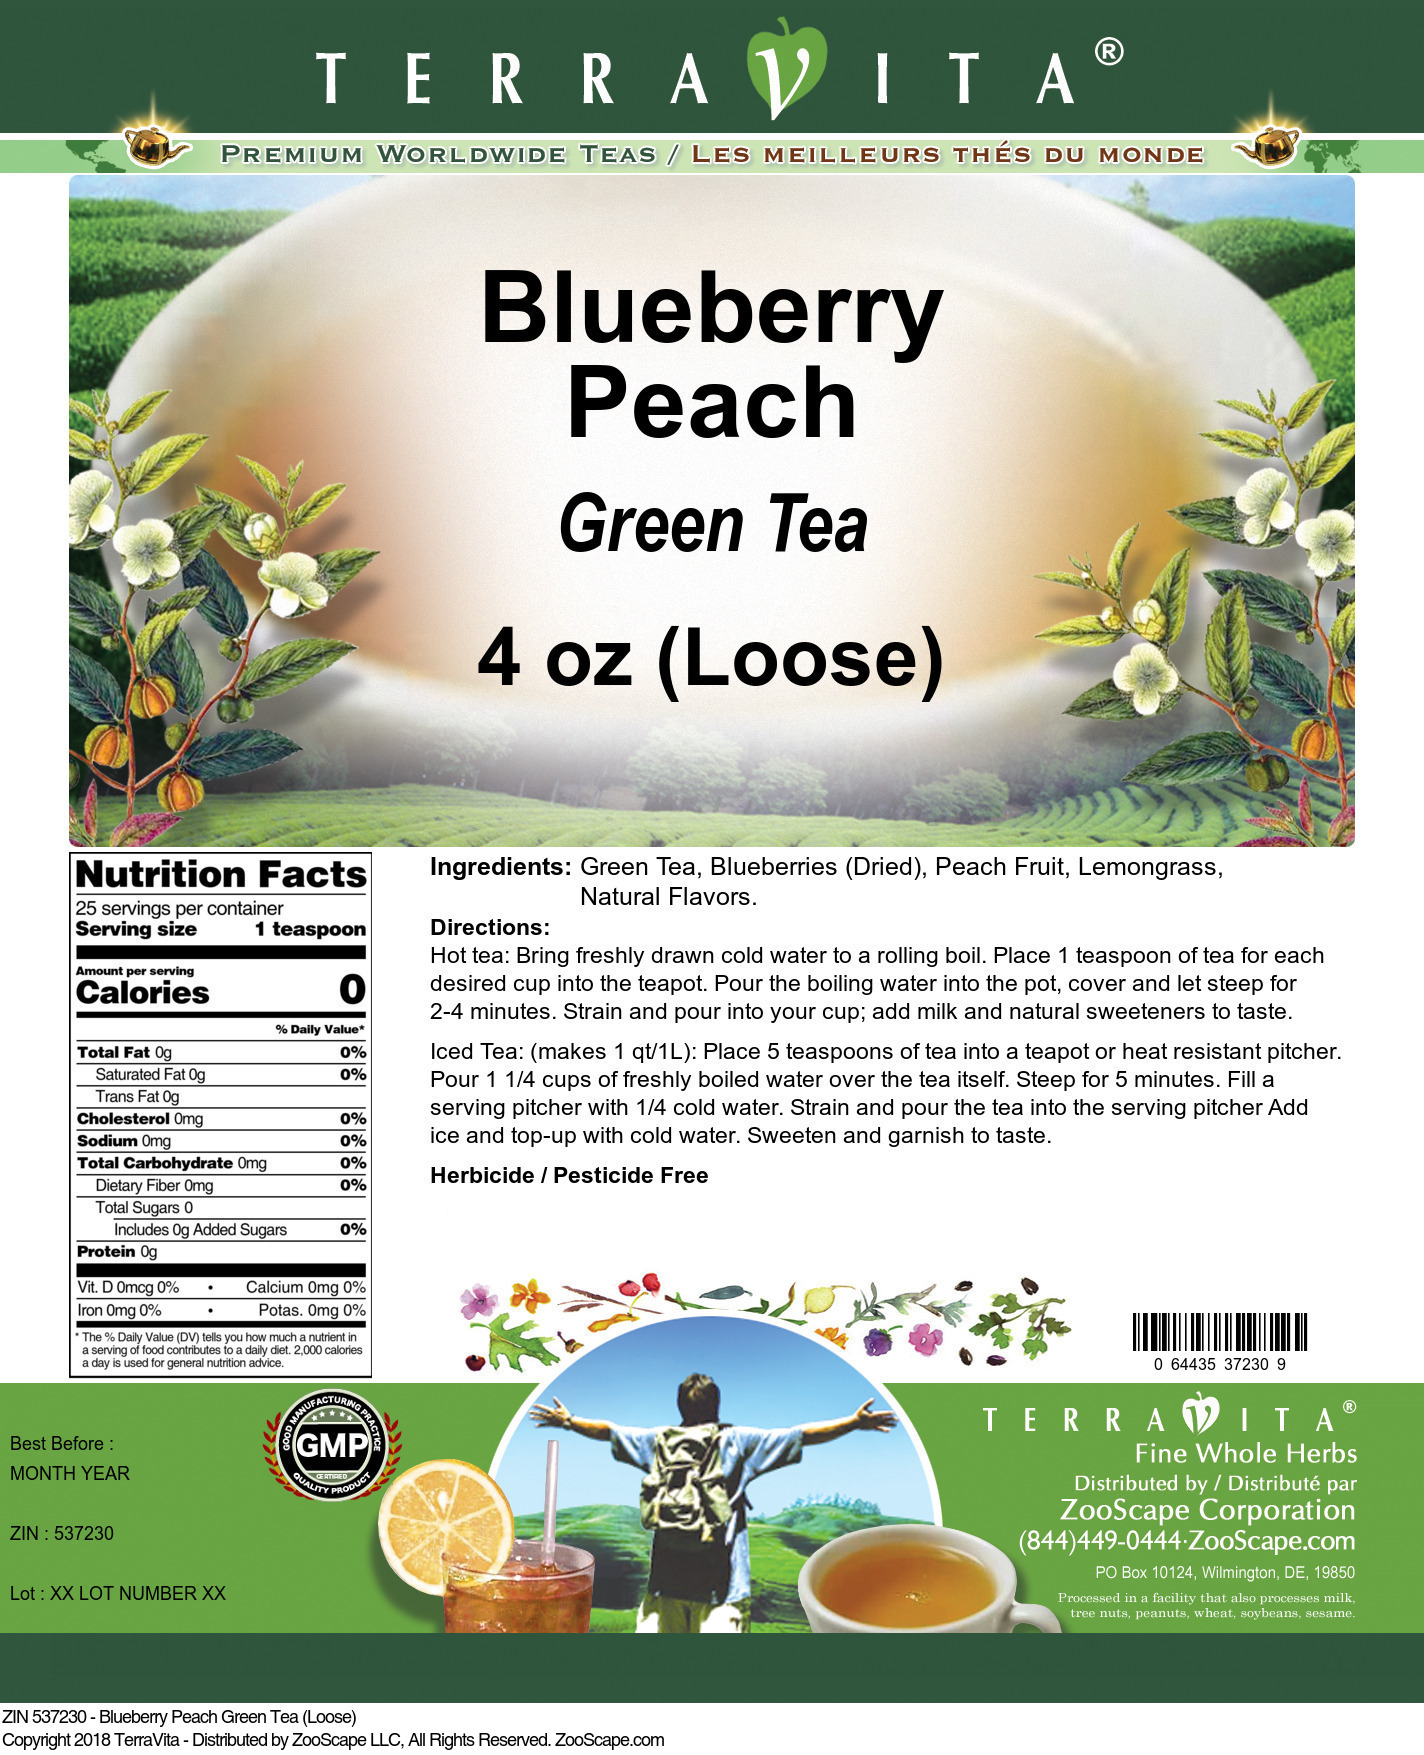 Blueberry Peach Green Tea (Loose) - Label